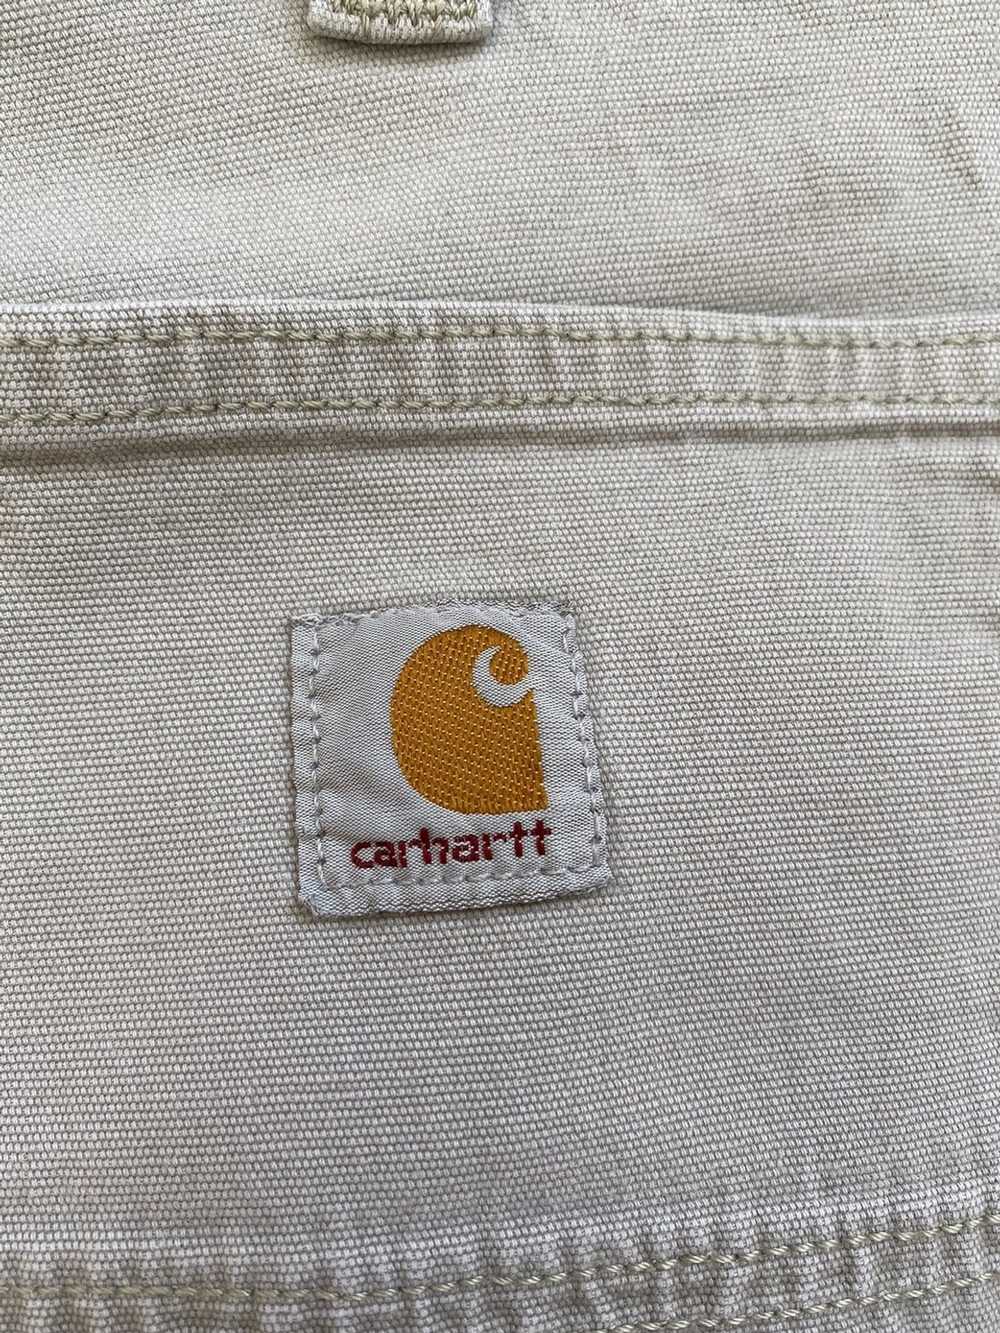 Carhartt Carhartt Cargo Pants - image 12